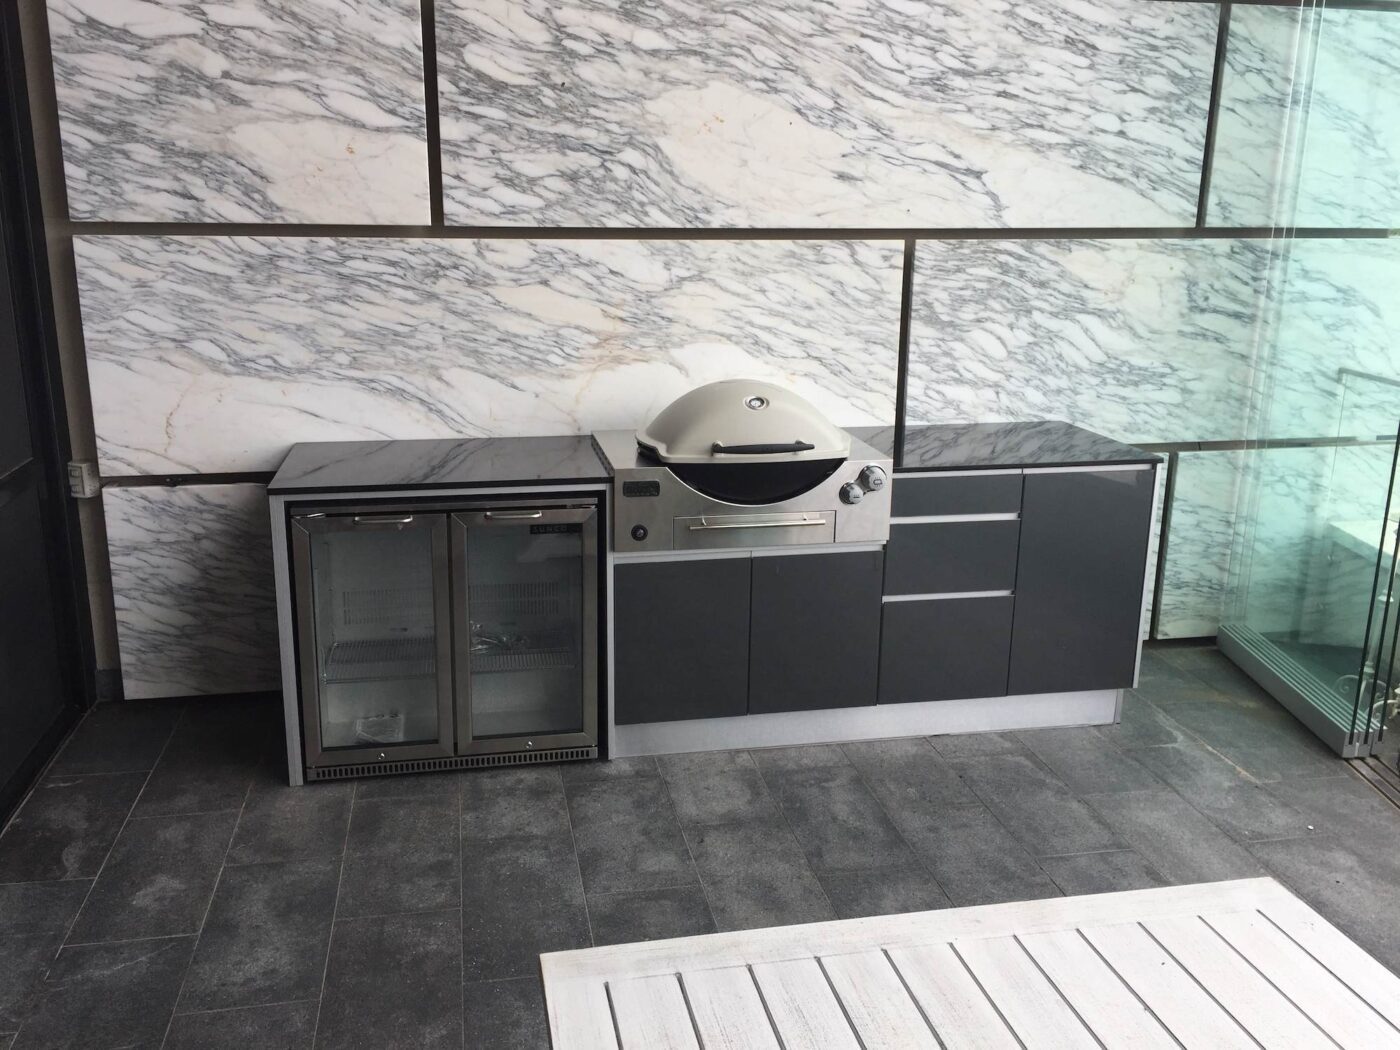 Full aluminium cabinets with titanium grey doors, and granite bench tops Sunco 2 Door fridge and a Weber Q BBQ. Location: